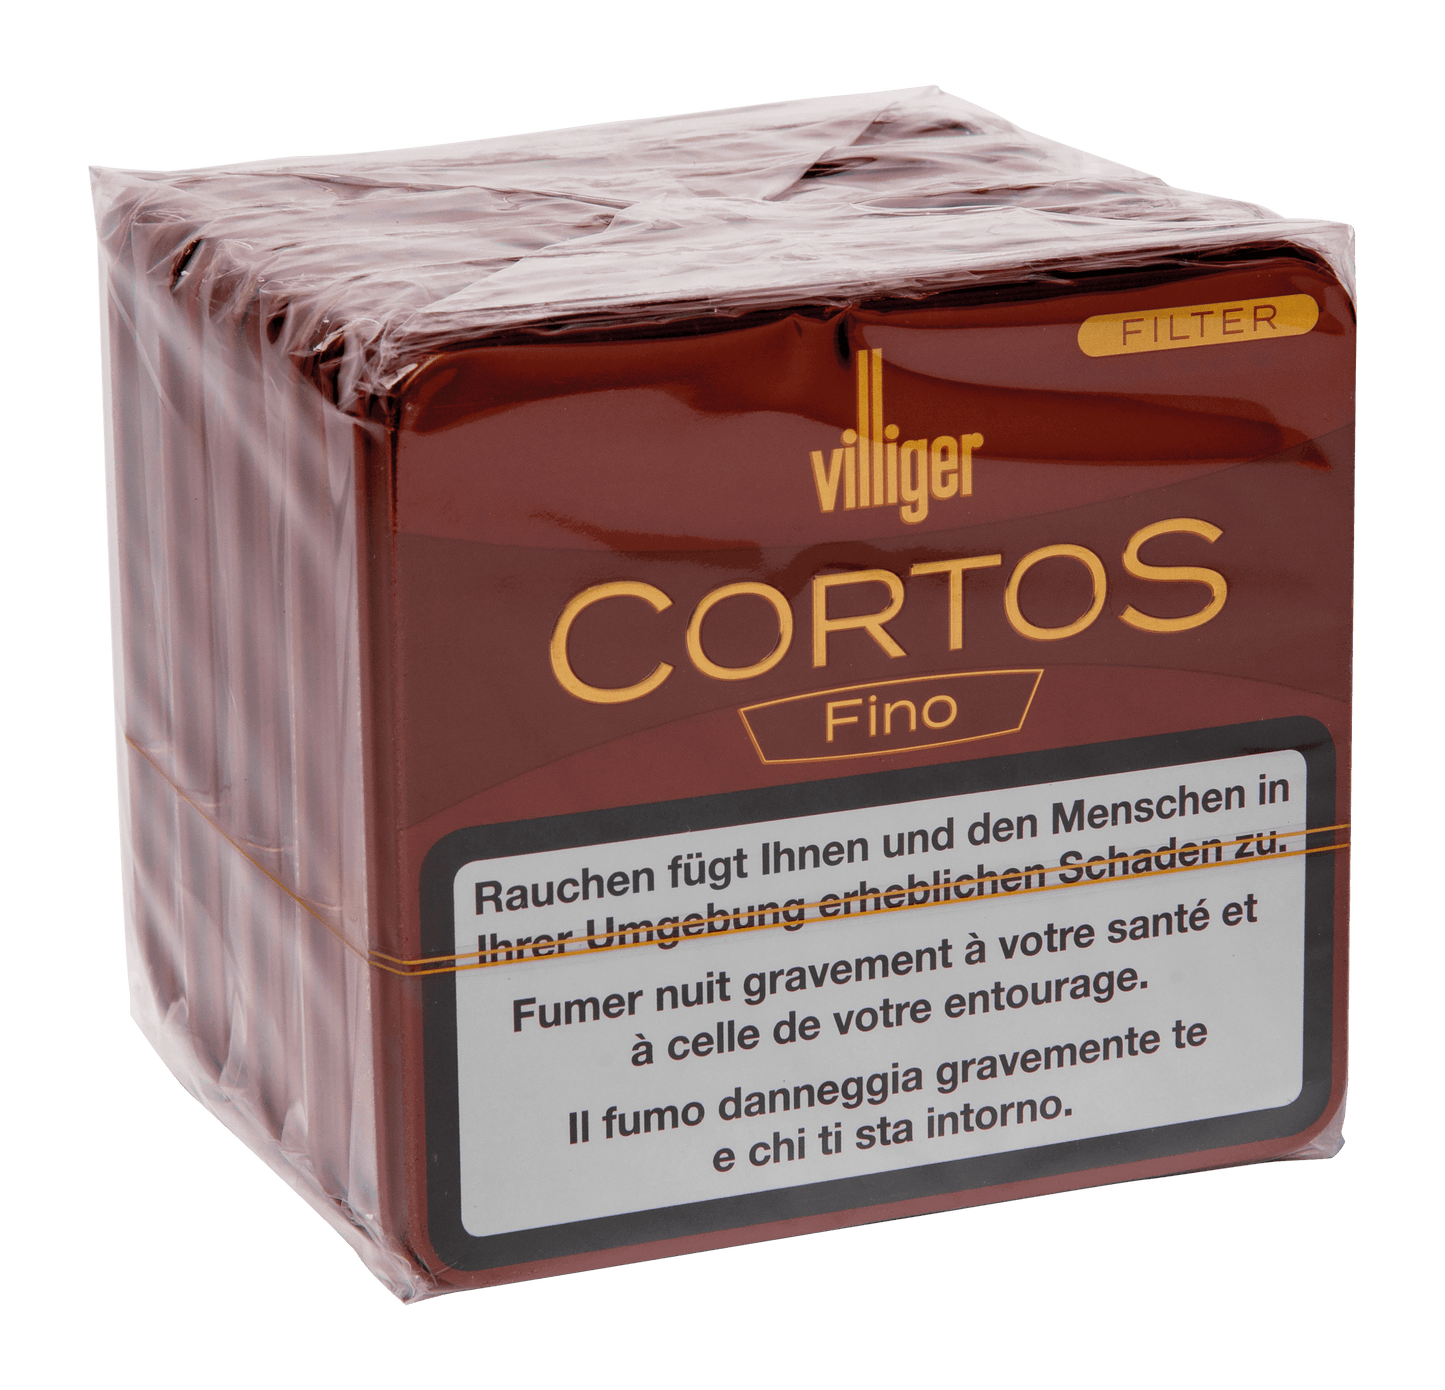 Villiger Cortos Fino Filtres 5x20